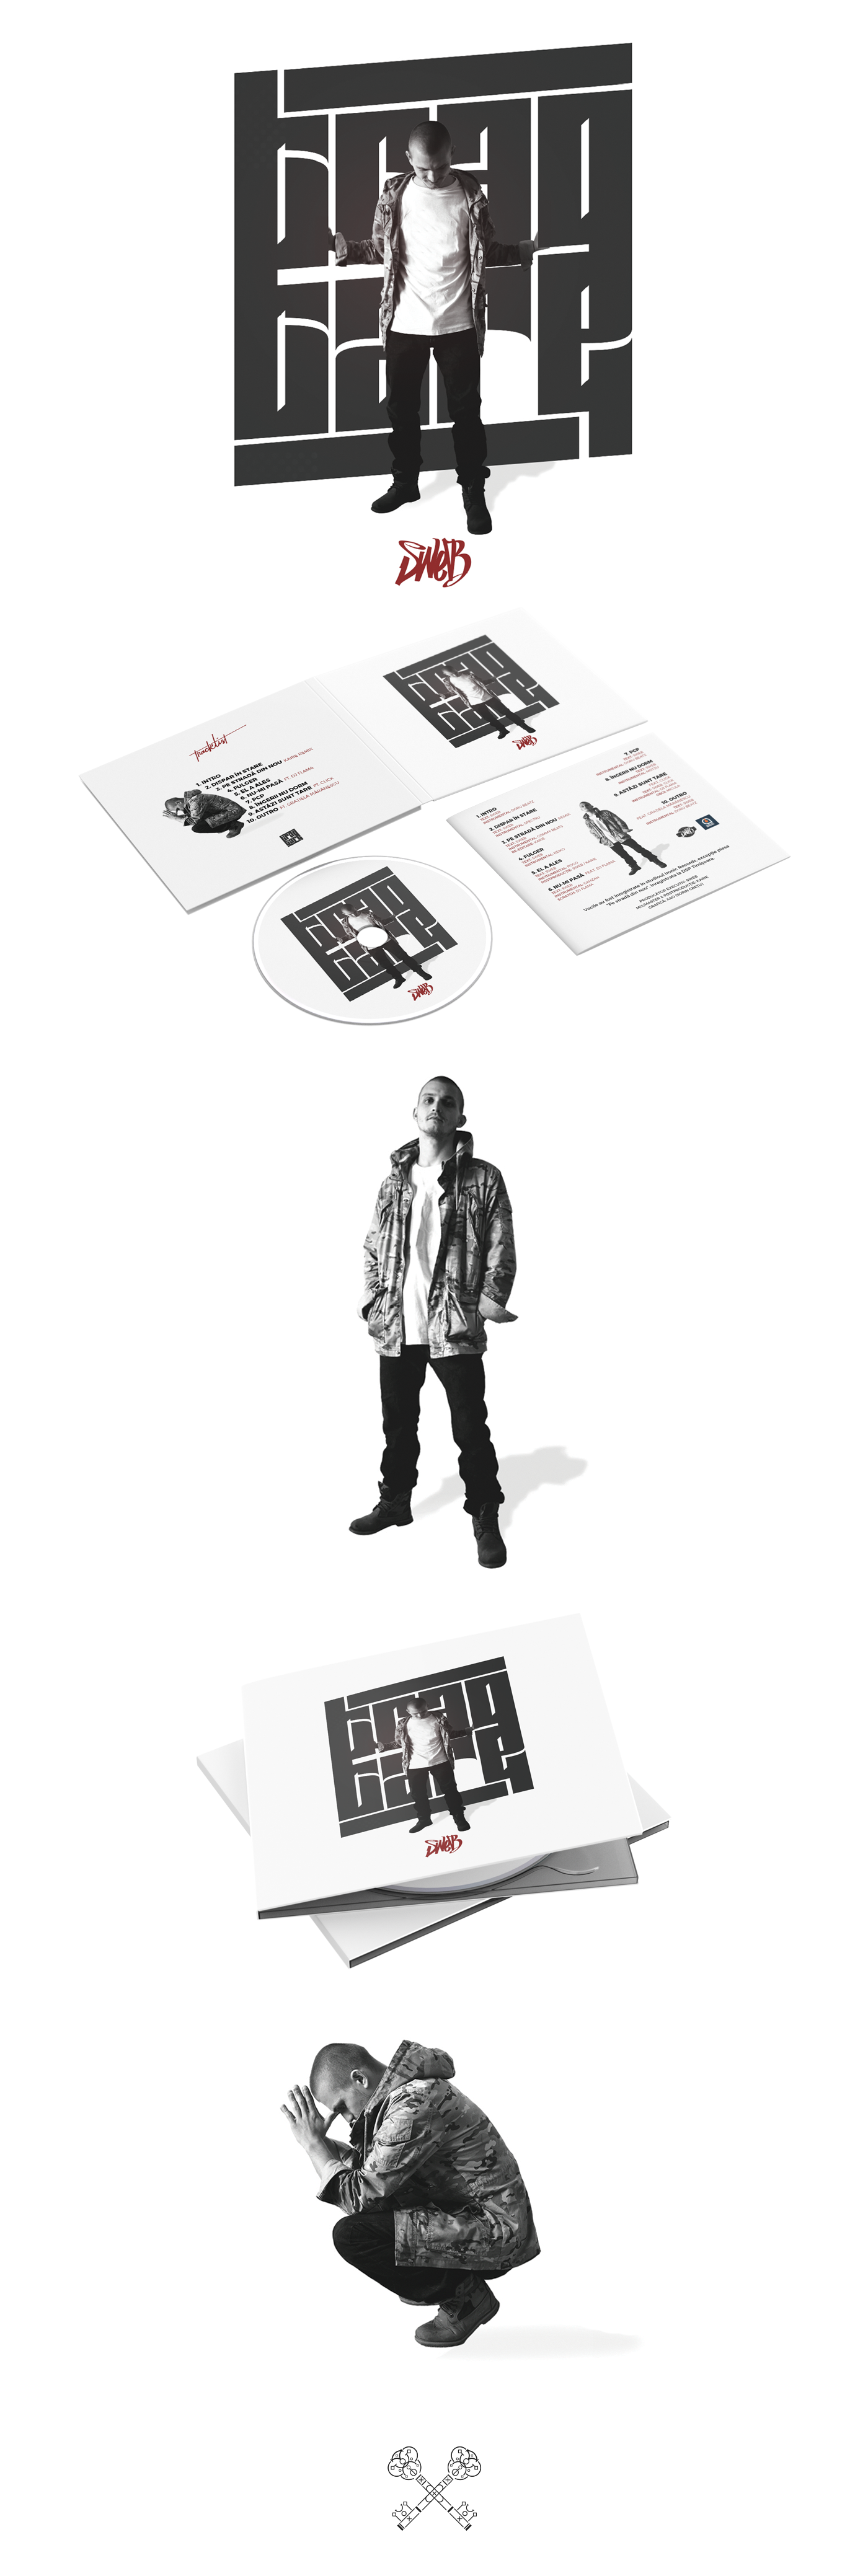 sweb tragtare music Album hip hop romania Packaging design